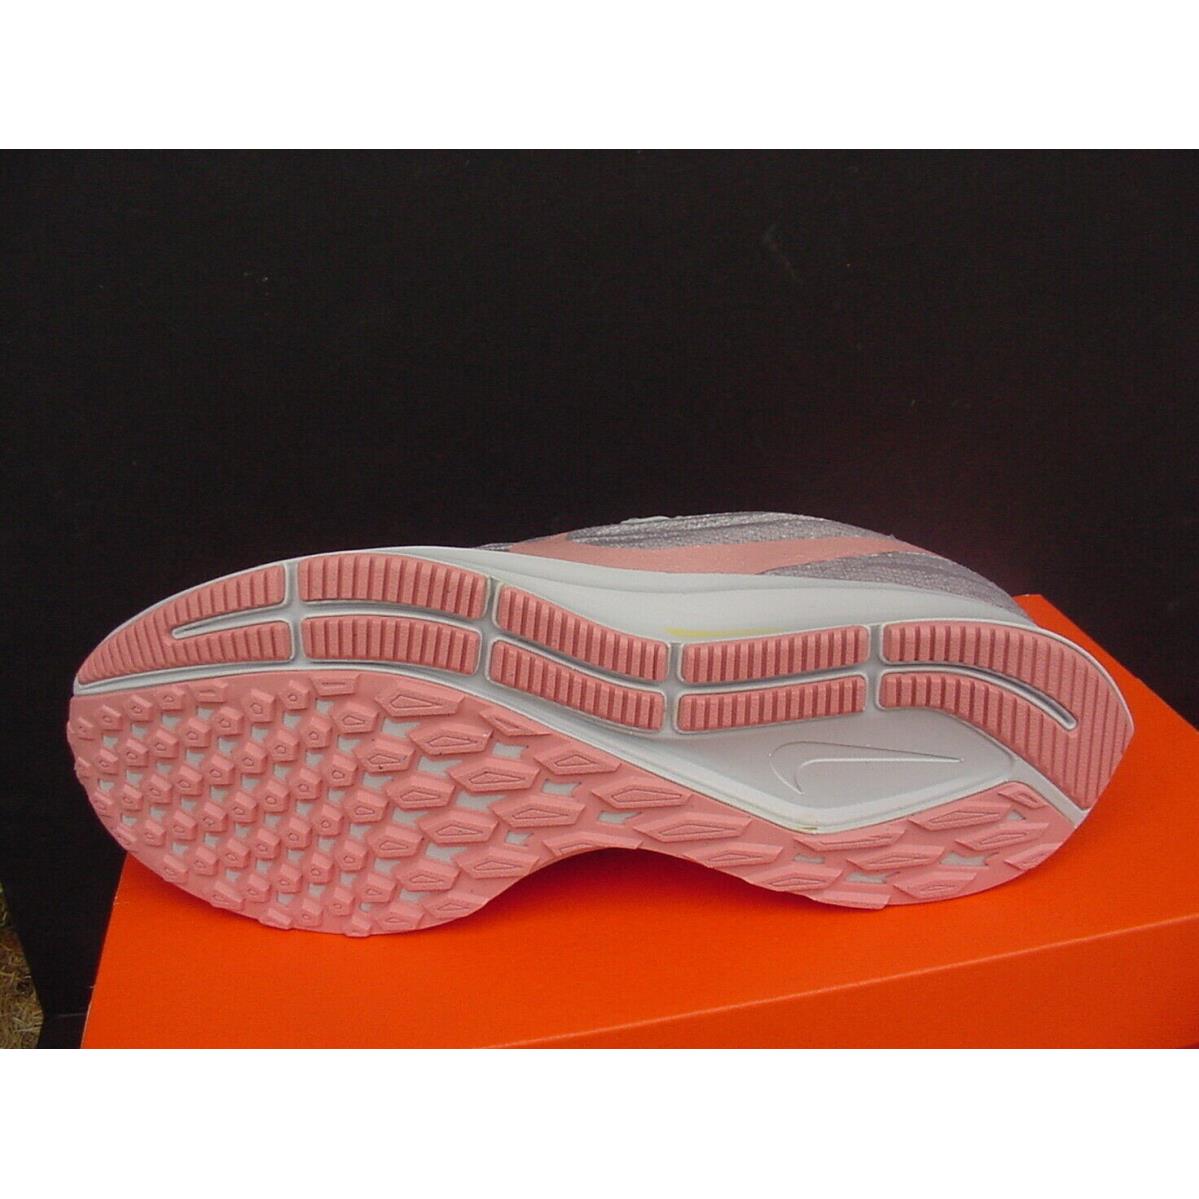 Nike shoes Air Zoom Pegasus - Pumice - Pink Quartz - Vast Gray - Taupe Tan Peach 2